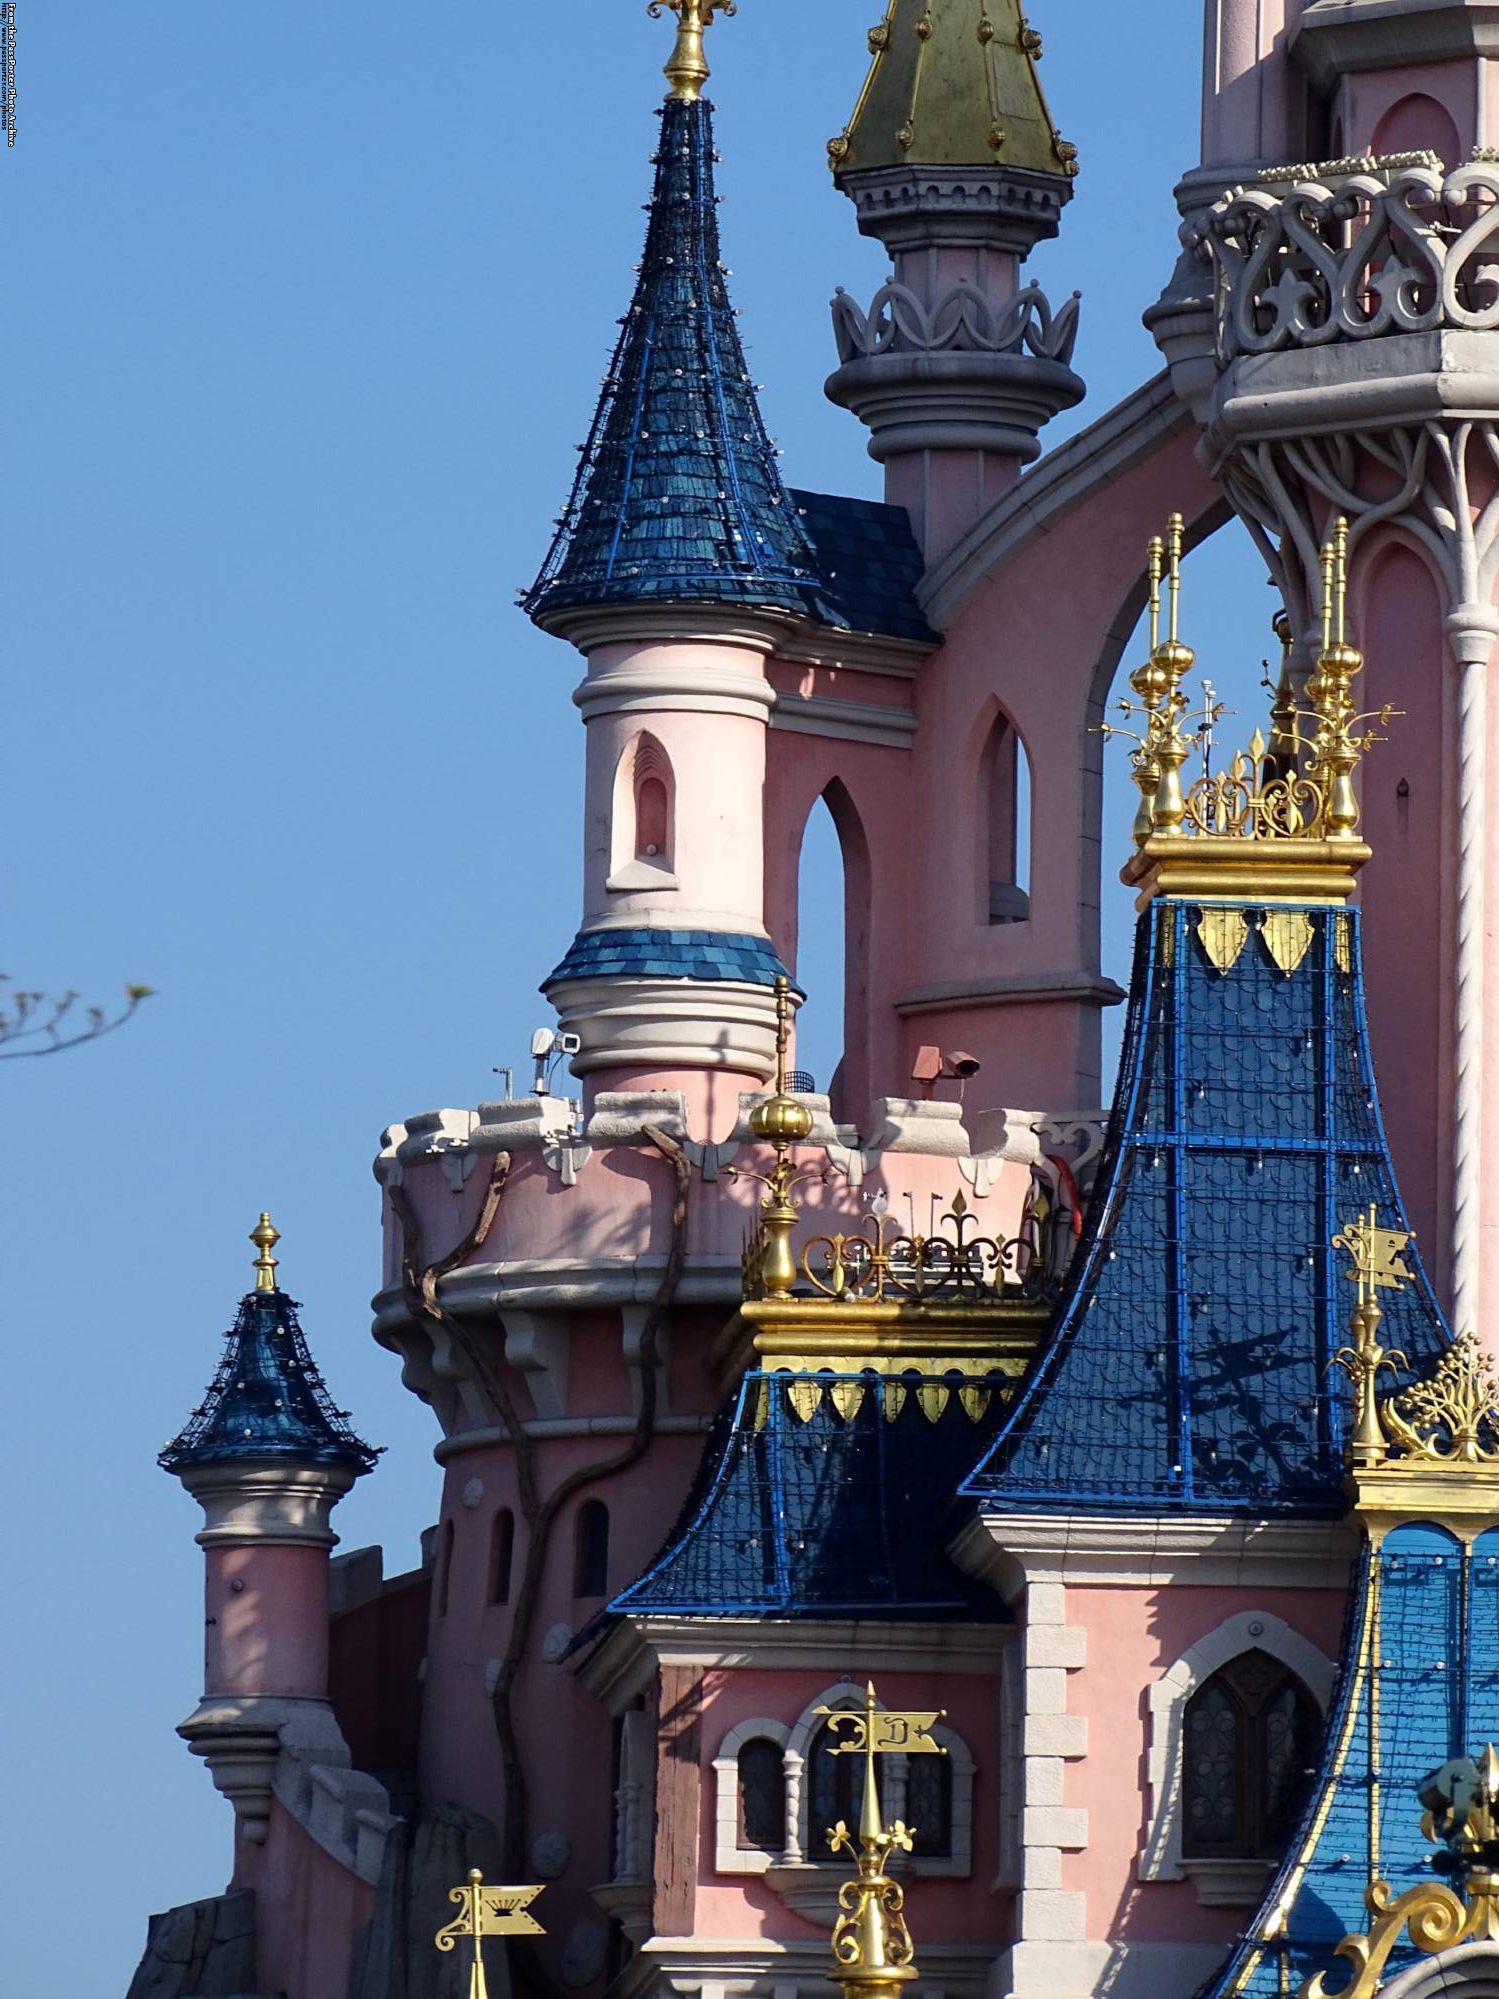 Disneyland Paris - Sleeping Beauty